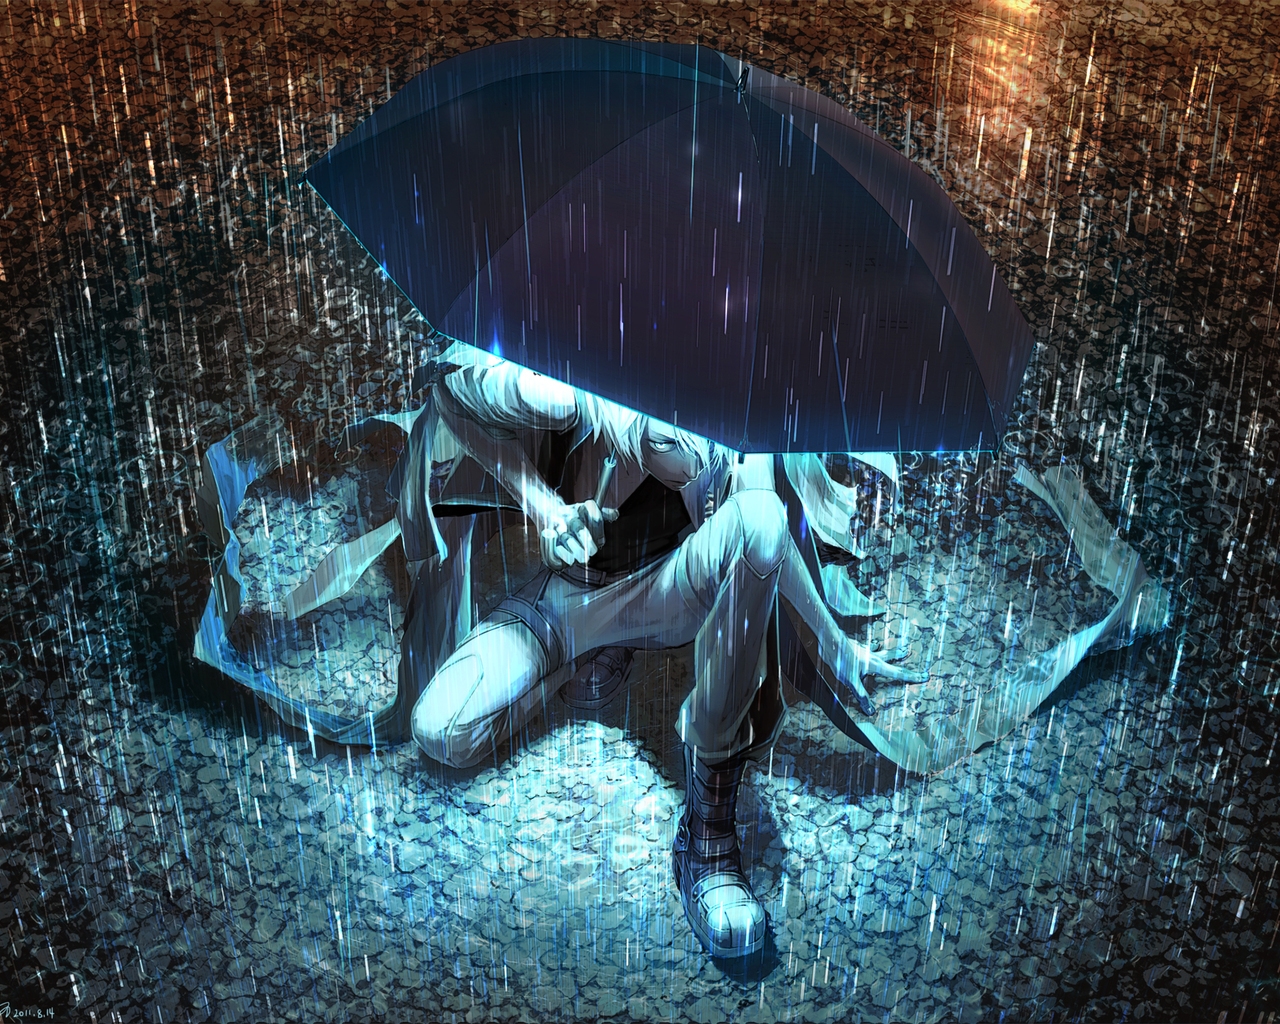 Knight Under the Umbrella for 1280 x 1024 resolution